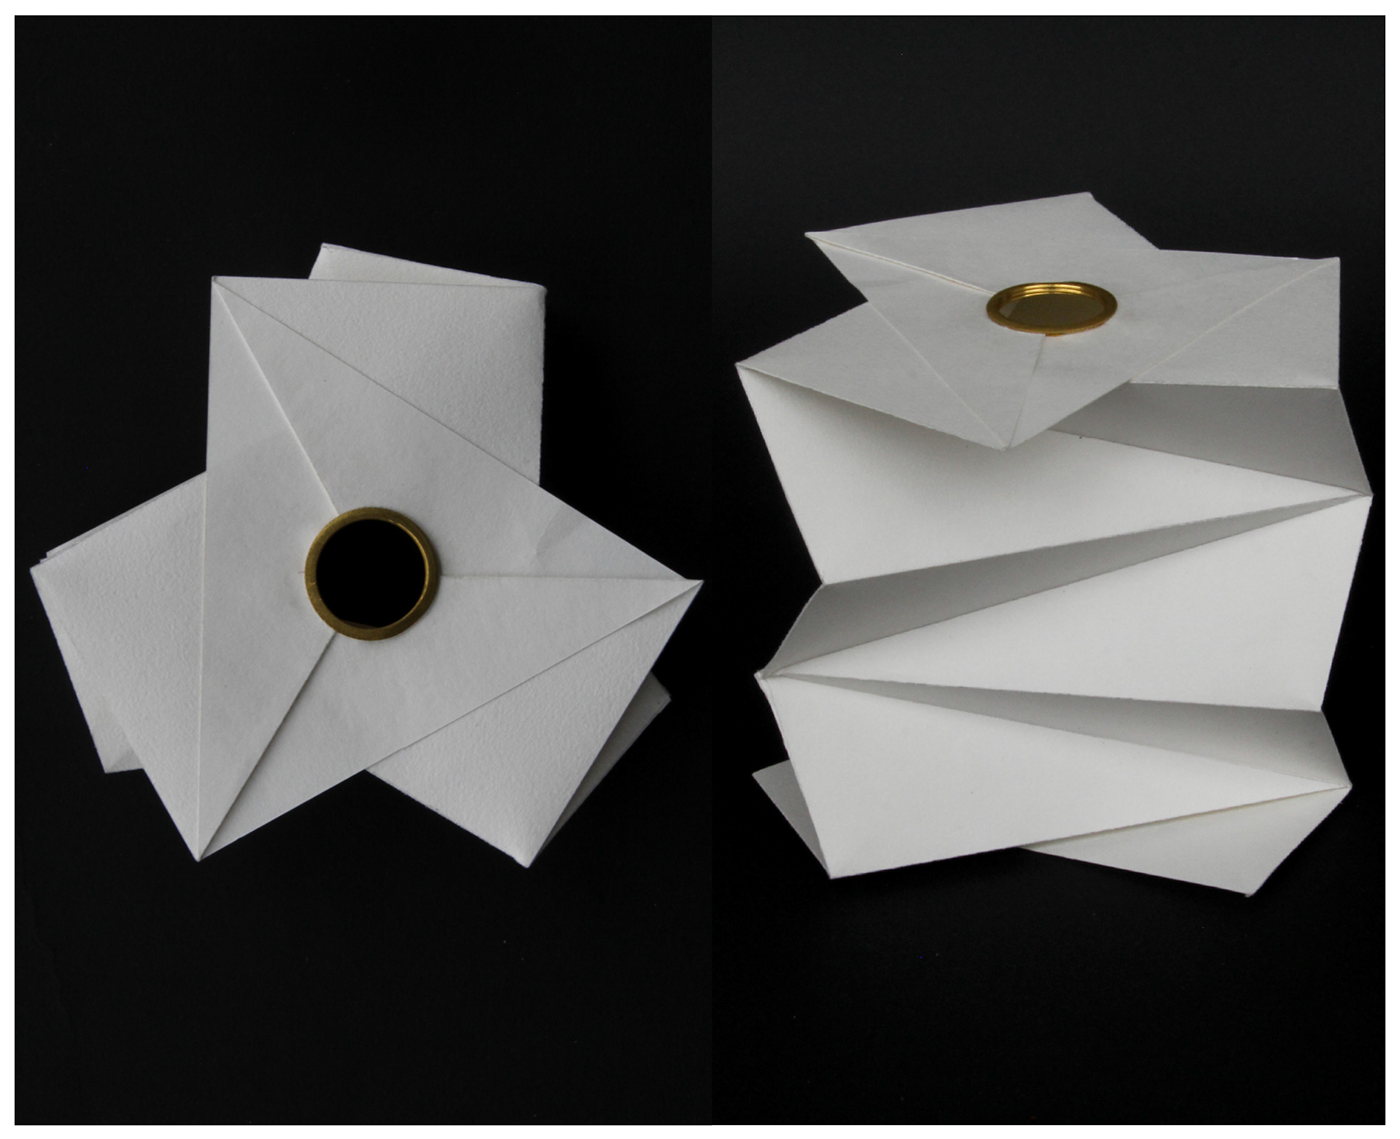 lighting Lamp affordable Sustainable colorful minimal origami  paper folding led